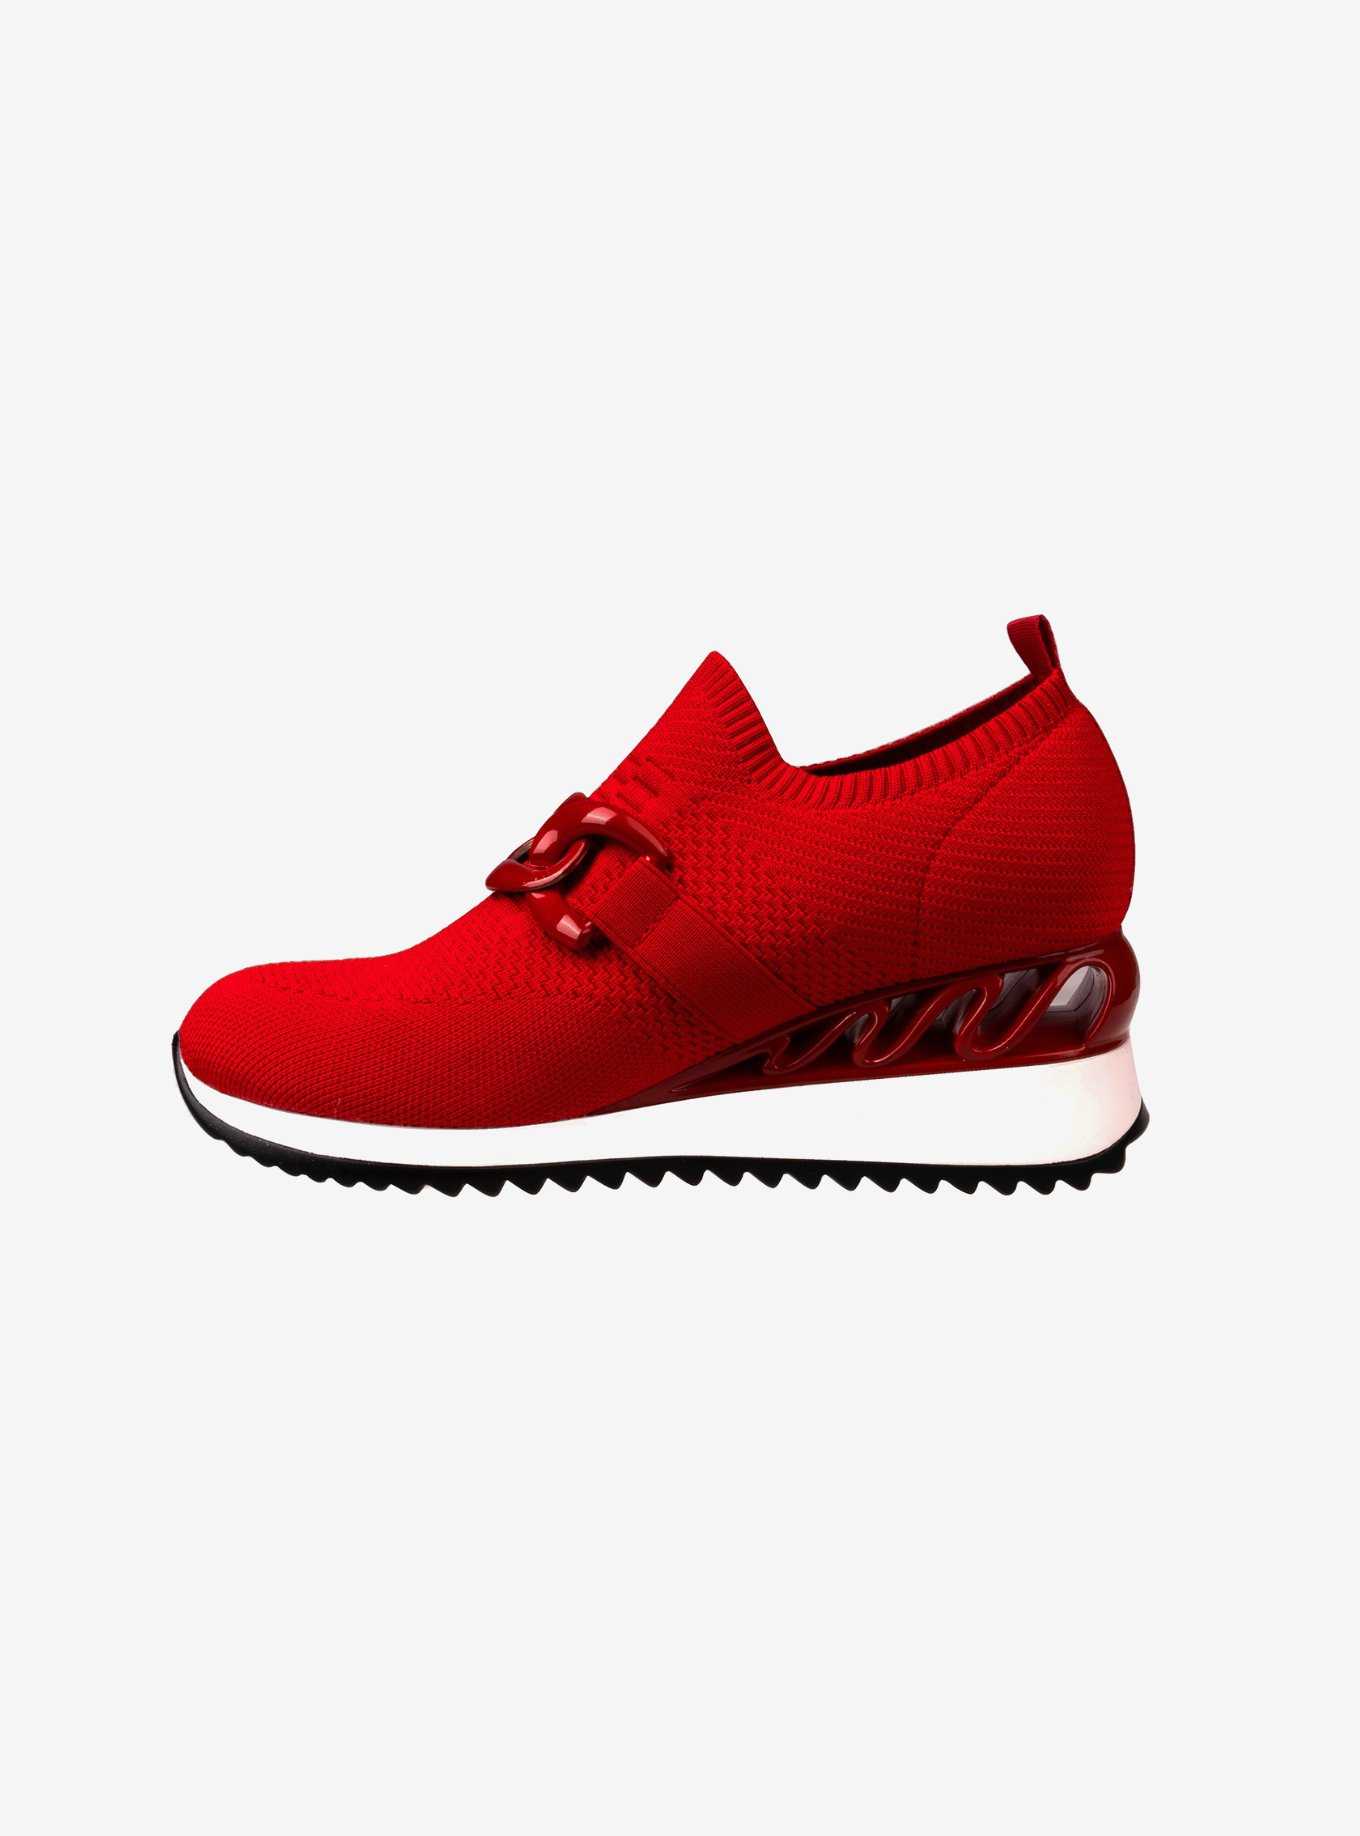 Boston Wedge Sneaker Red, , hi-res